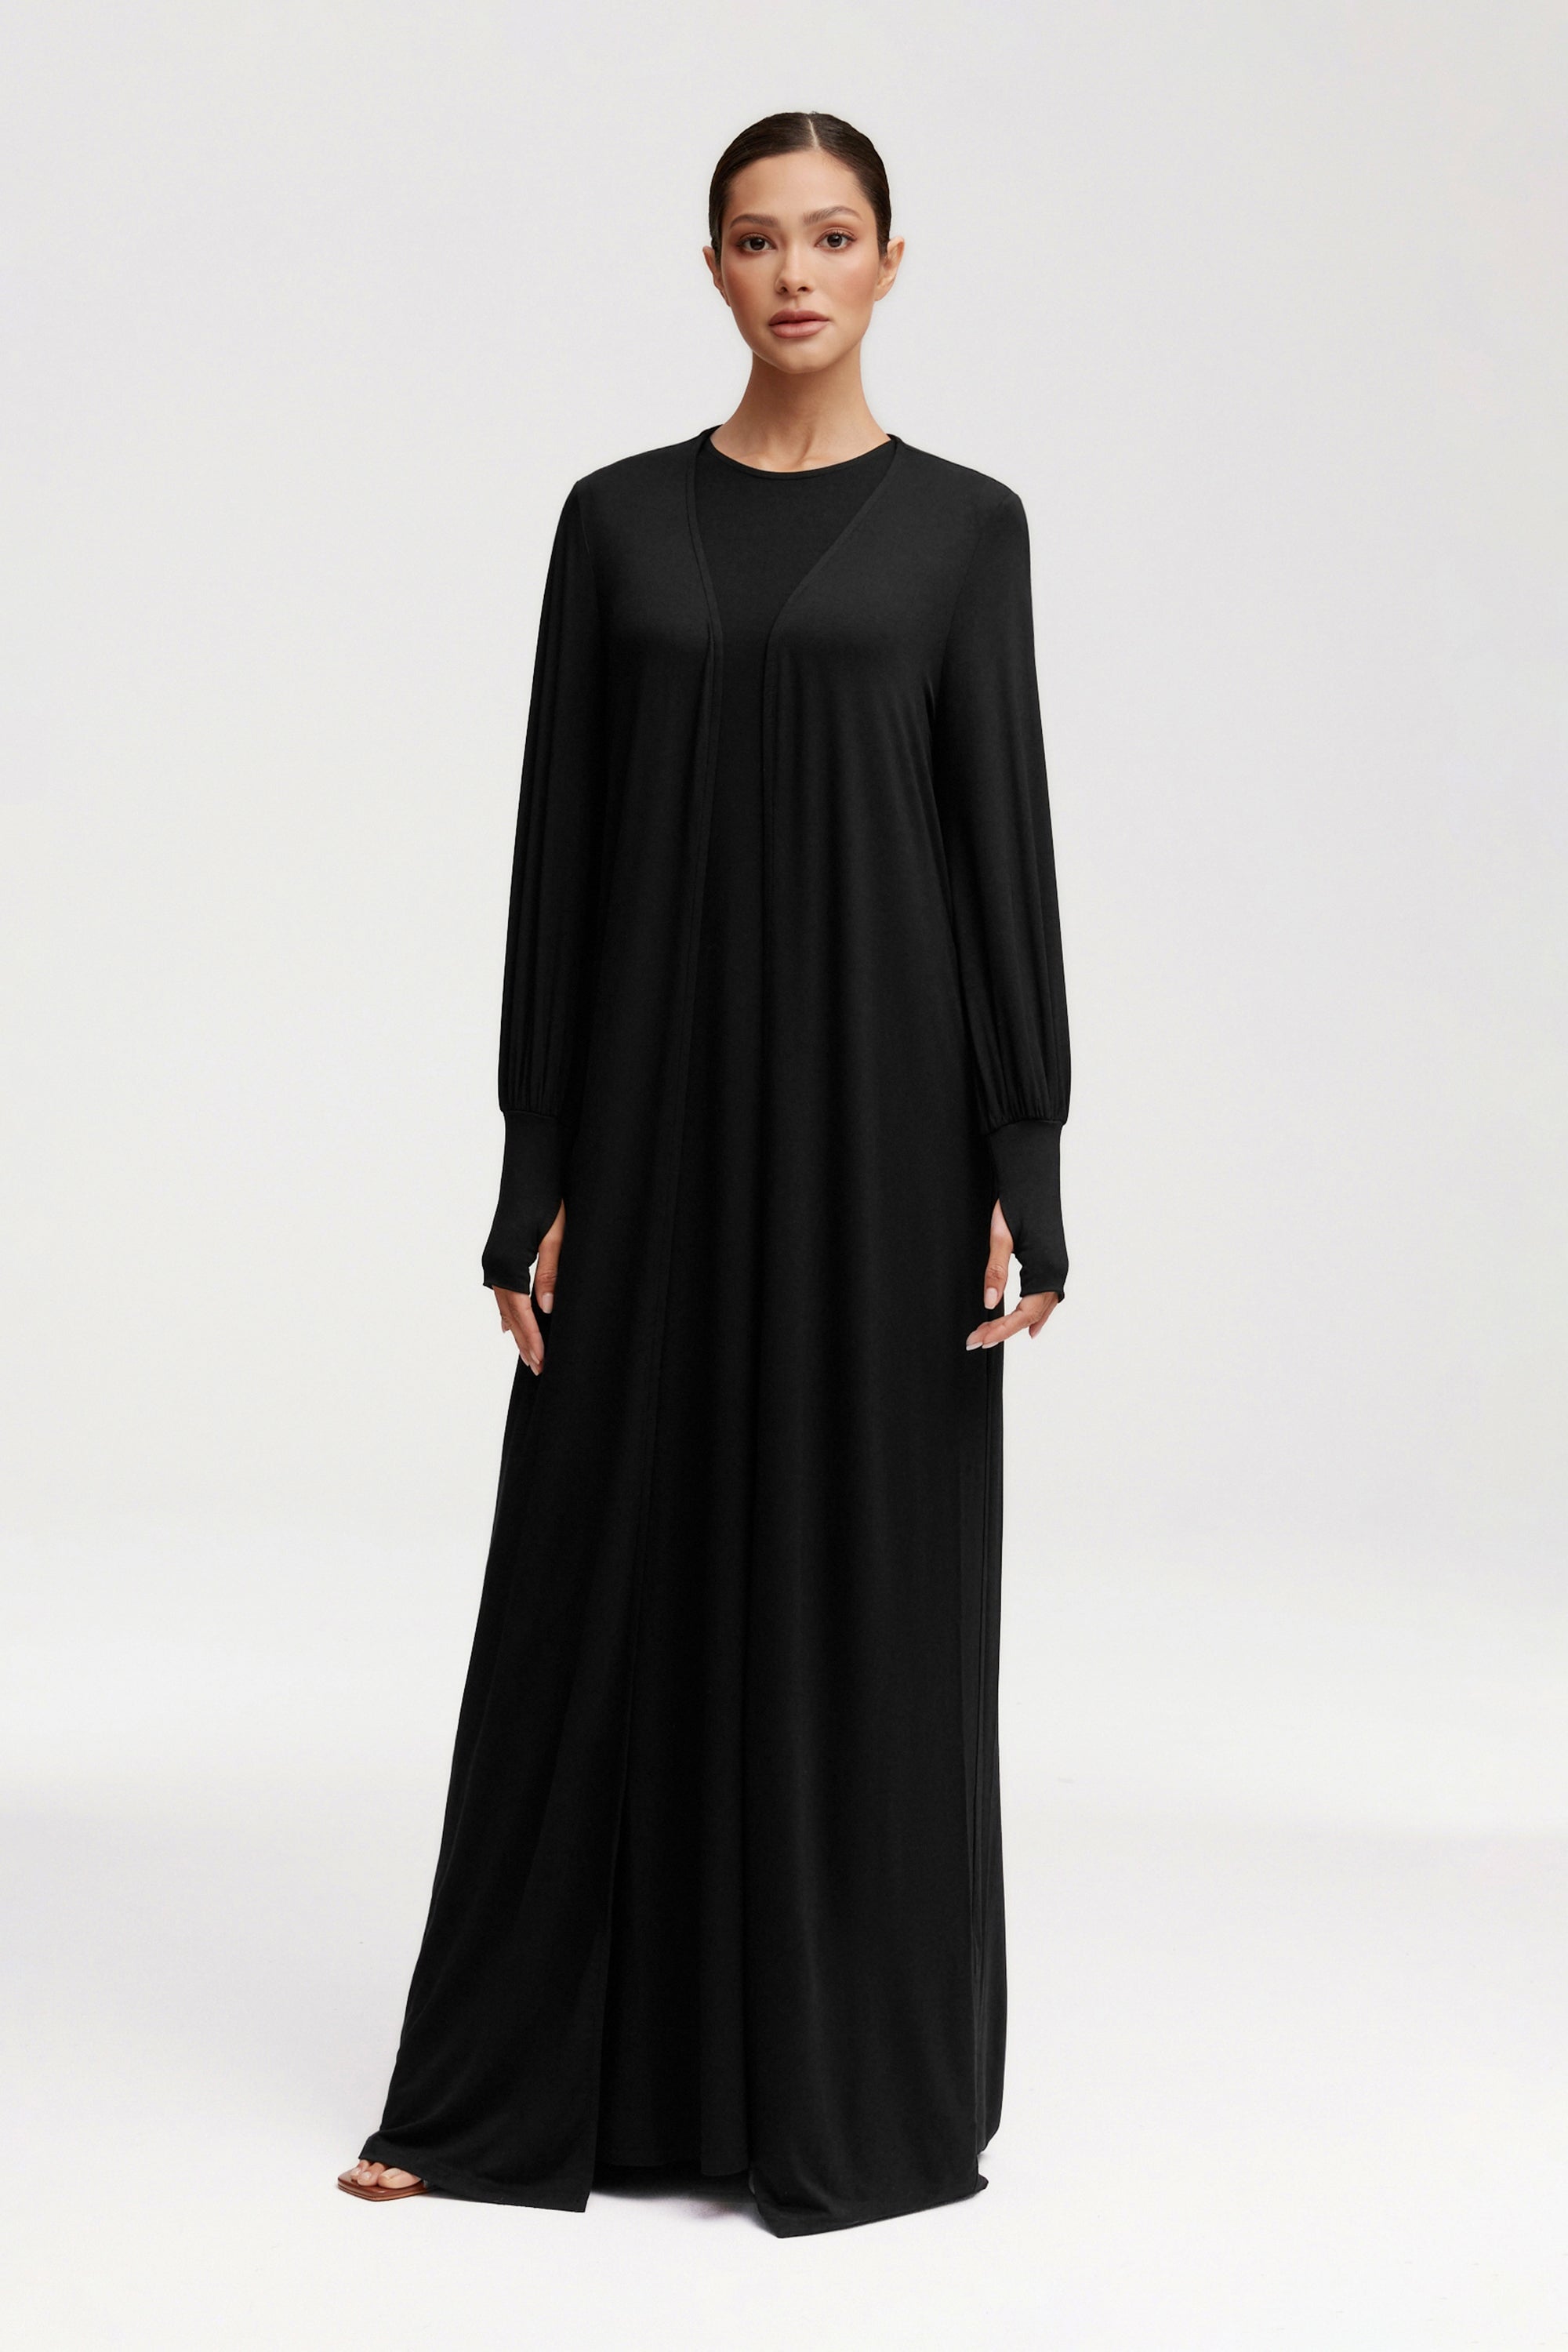 Jenin Jersey Open Abaya - Black Clothing Veiled 